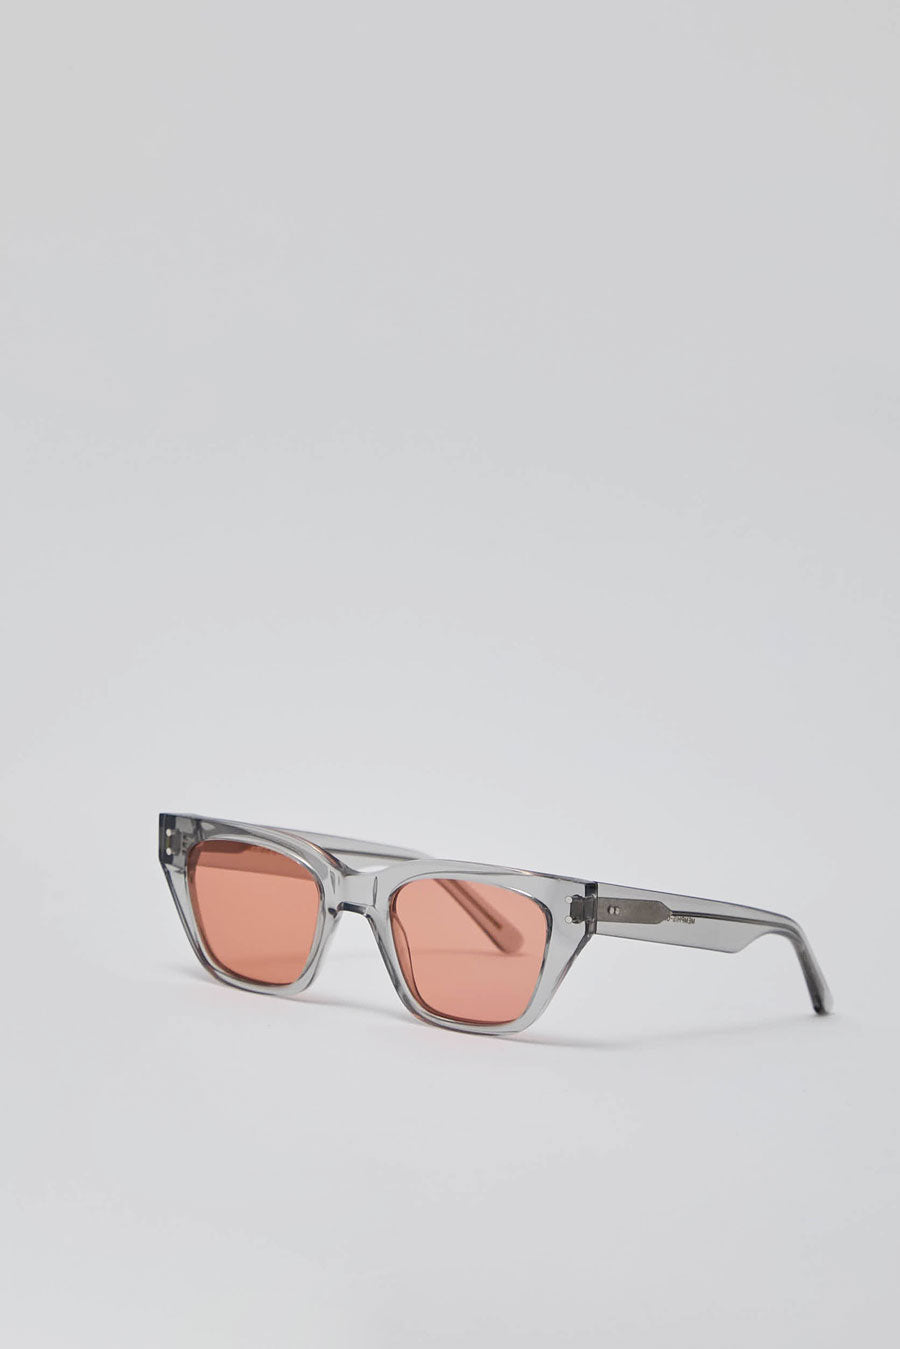 Monokel Memphis Sunglasses in Grey and Orange